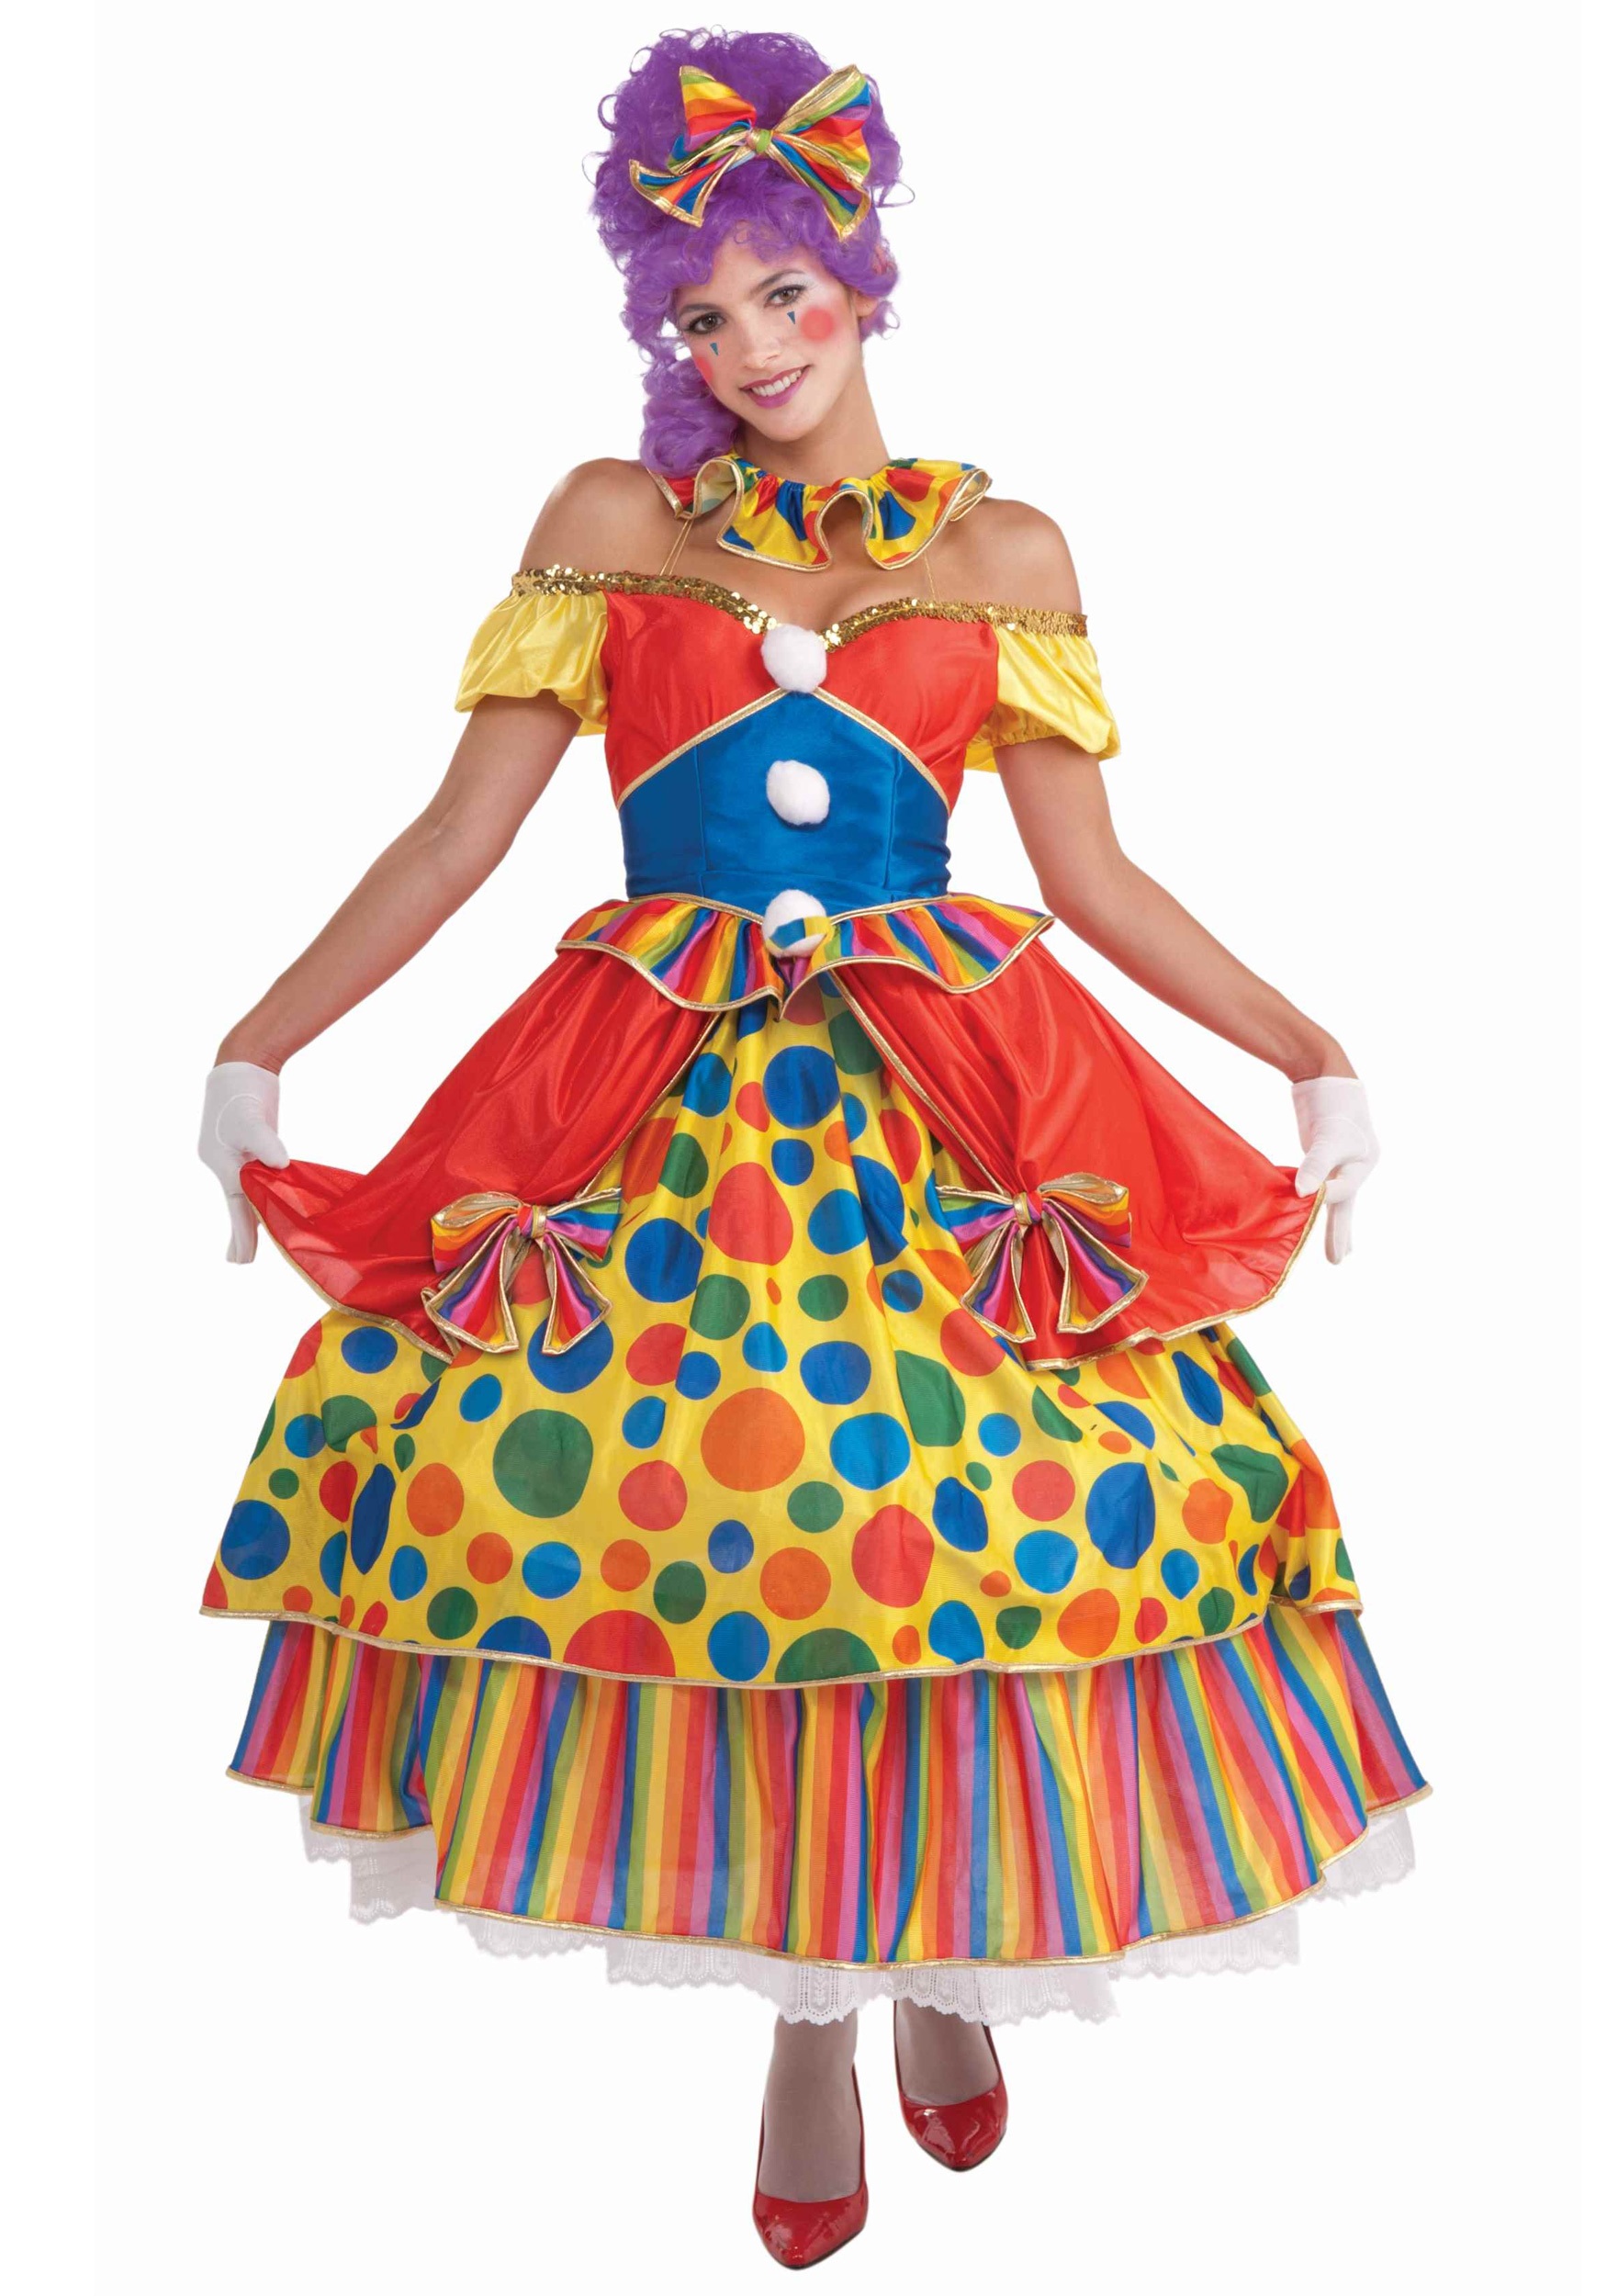 Clowning Around Woman Costume Mardi Gras Circus Clown Polka Dot Lady